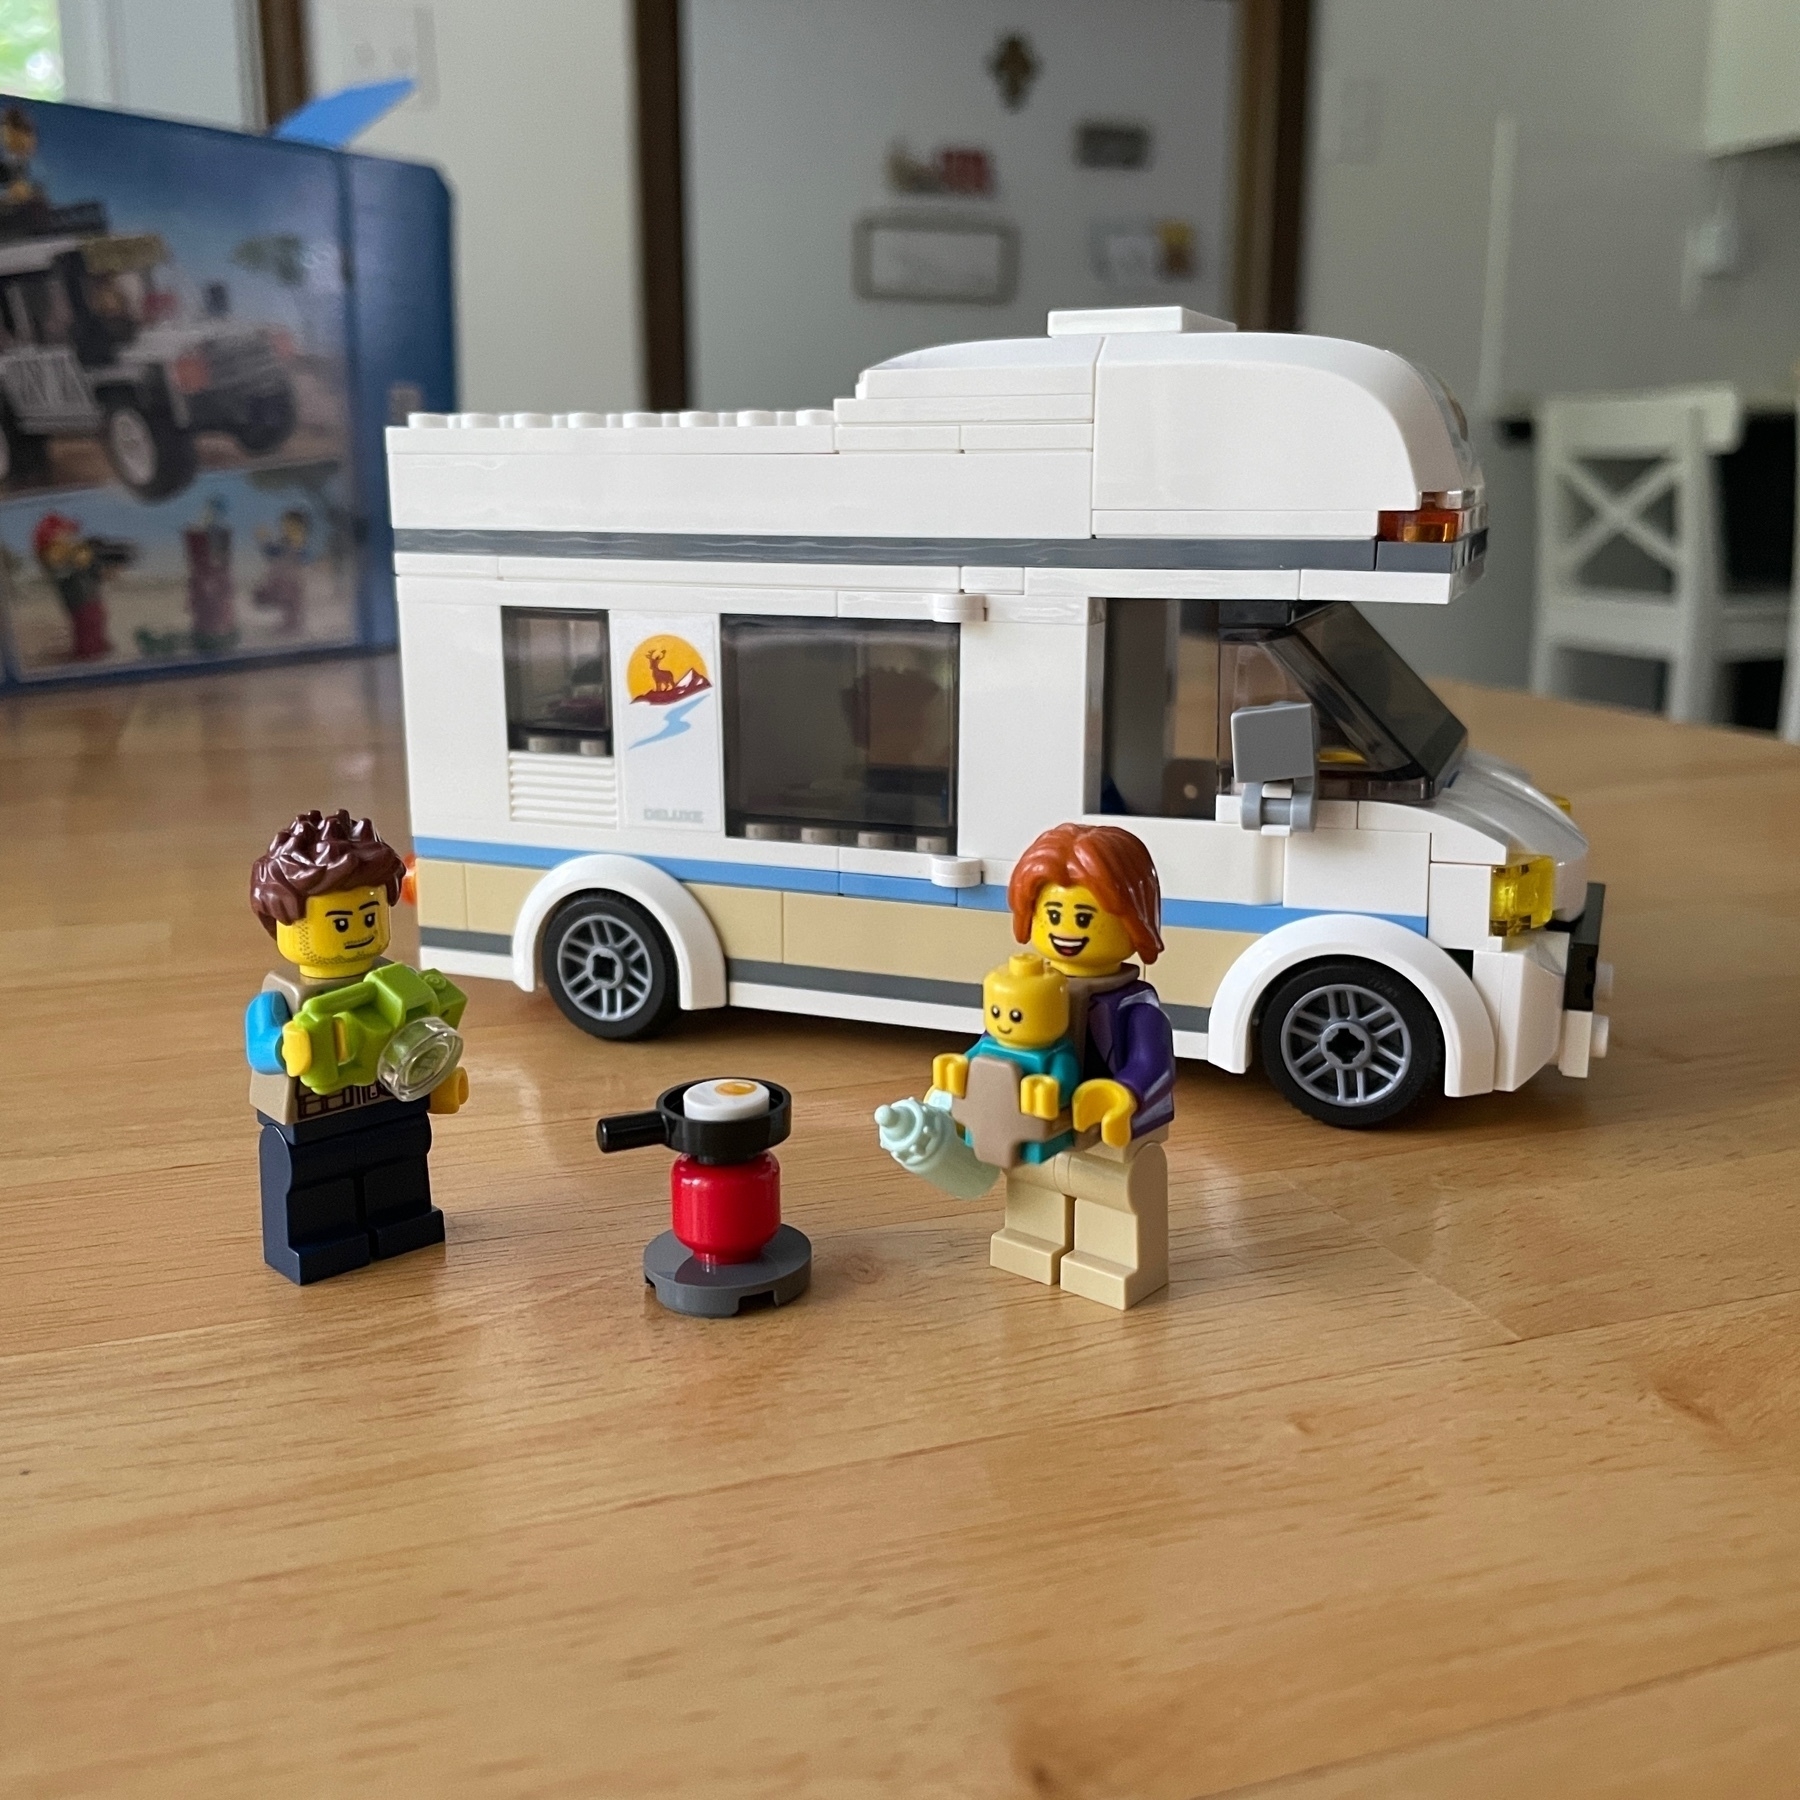 LEGO RV set